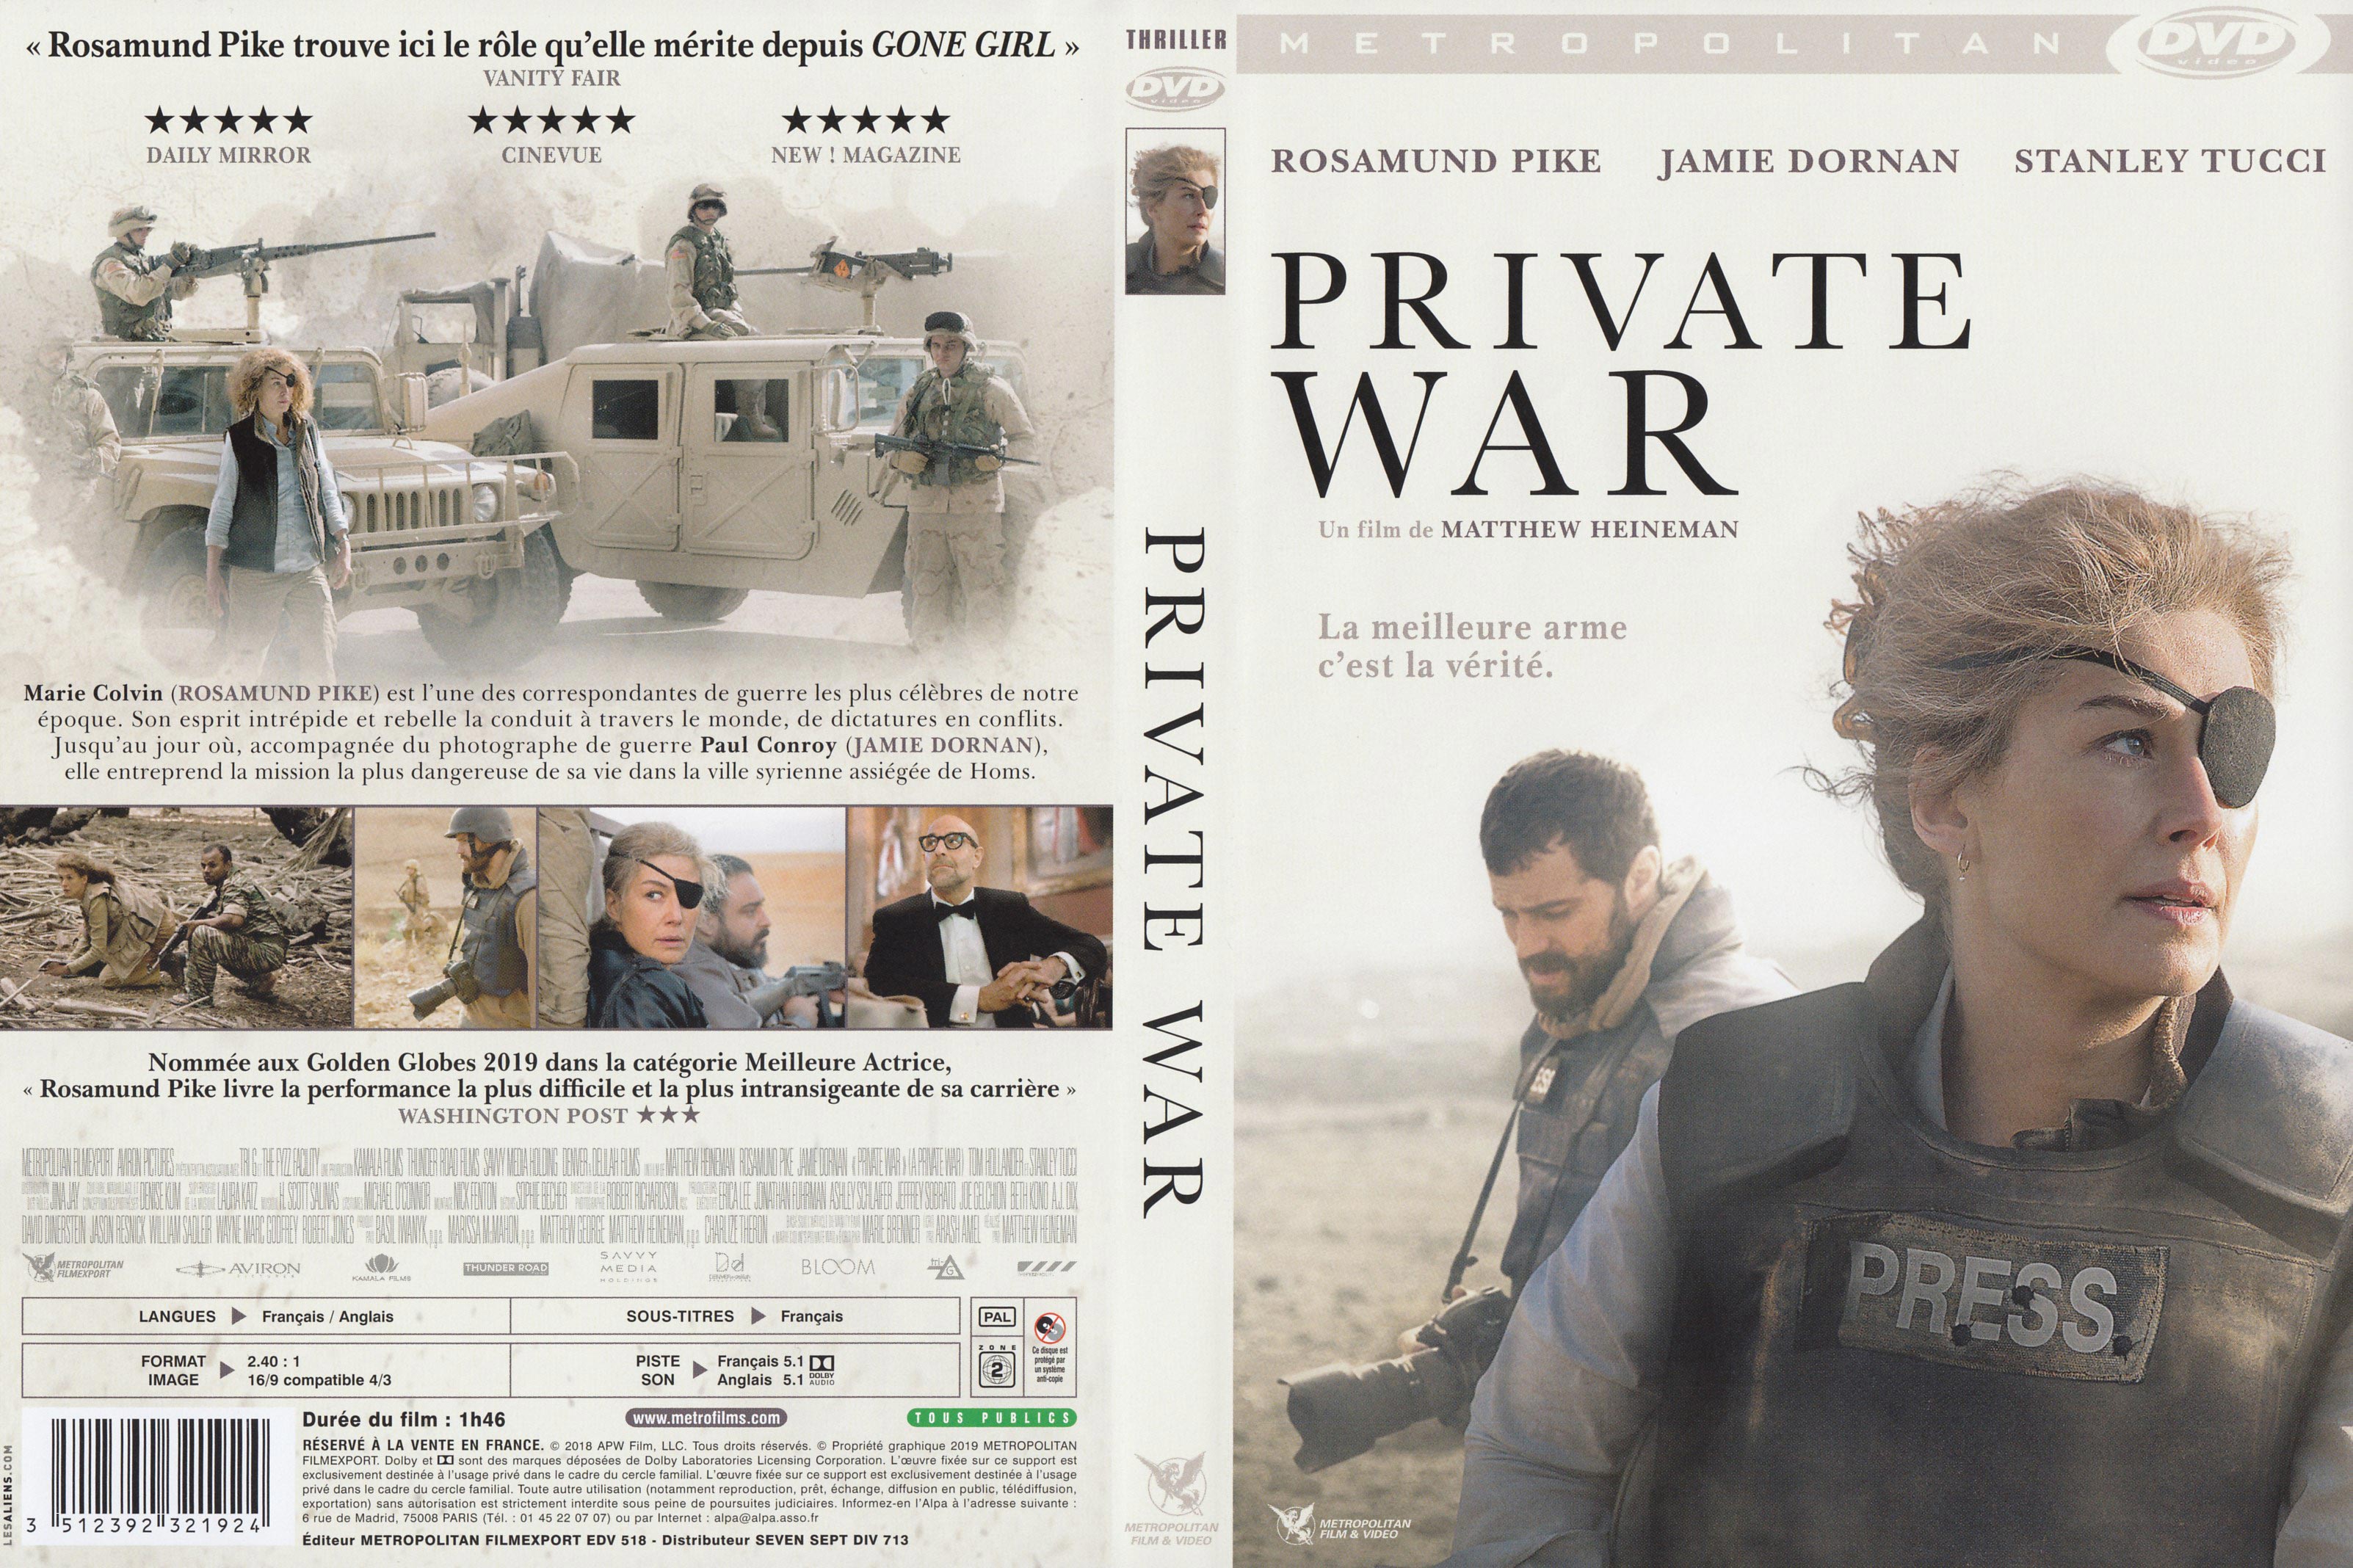 Jaquette DVD Private war